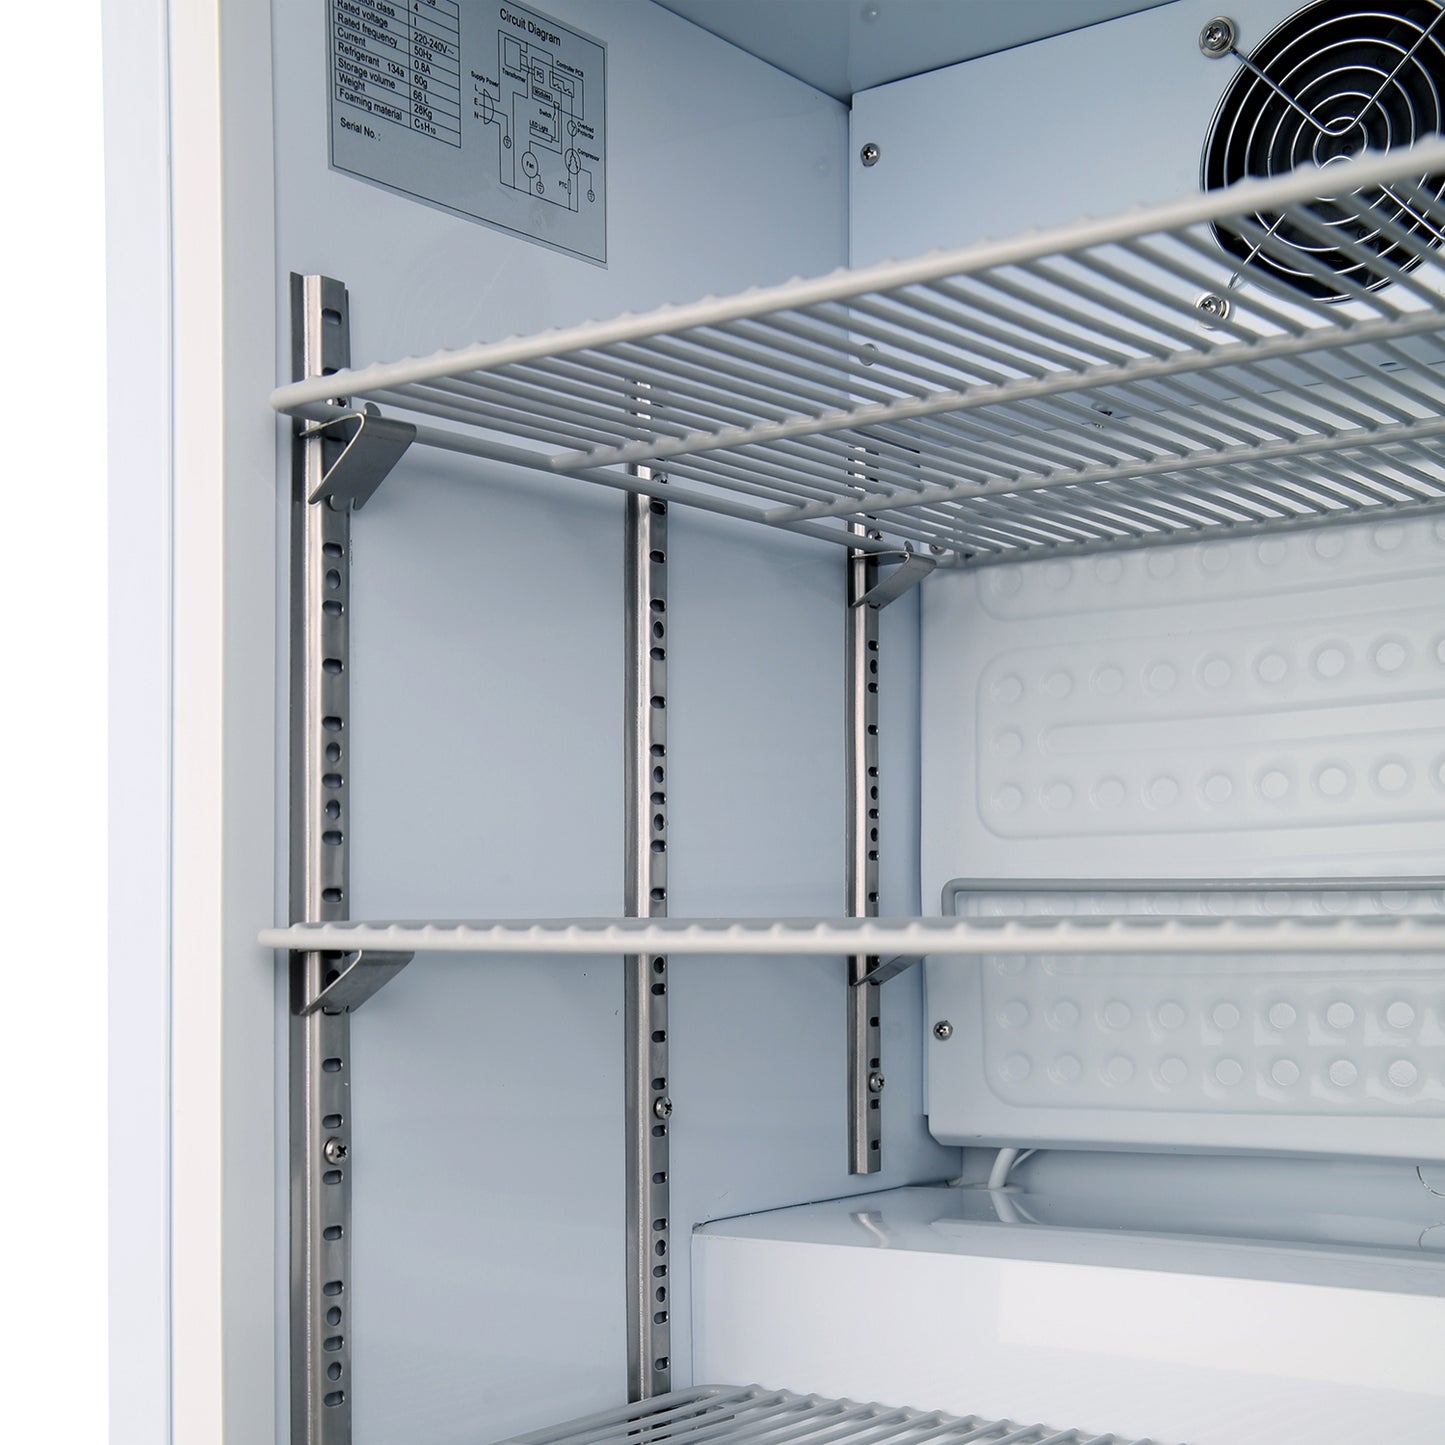 CoolMed Solid Door Refrigerator - 59 Litres - CMS59